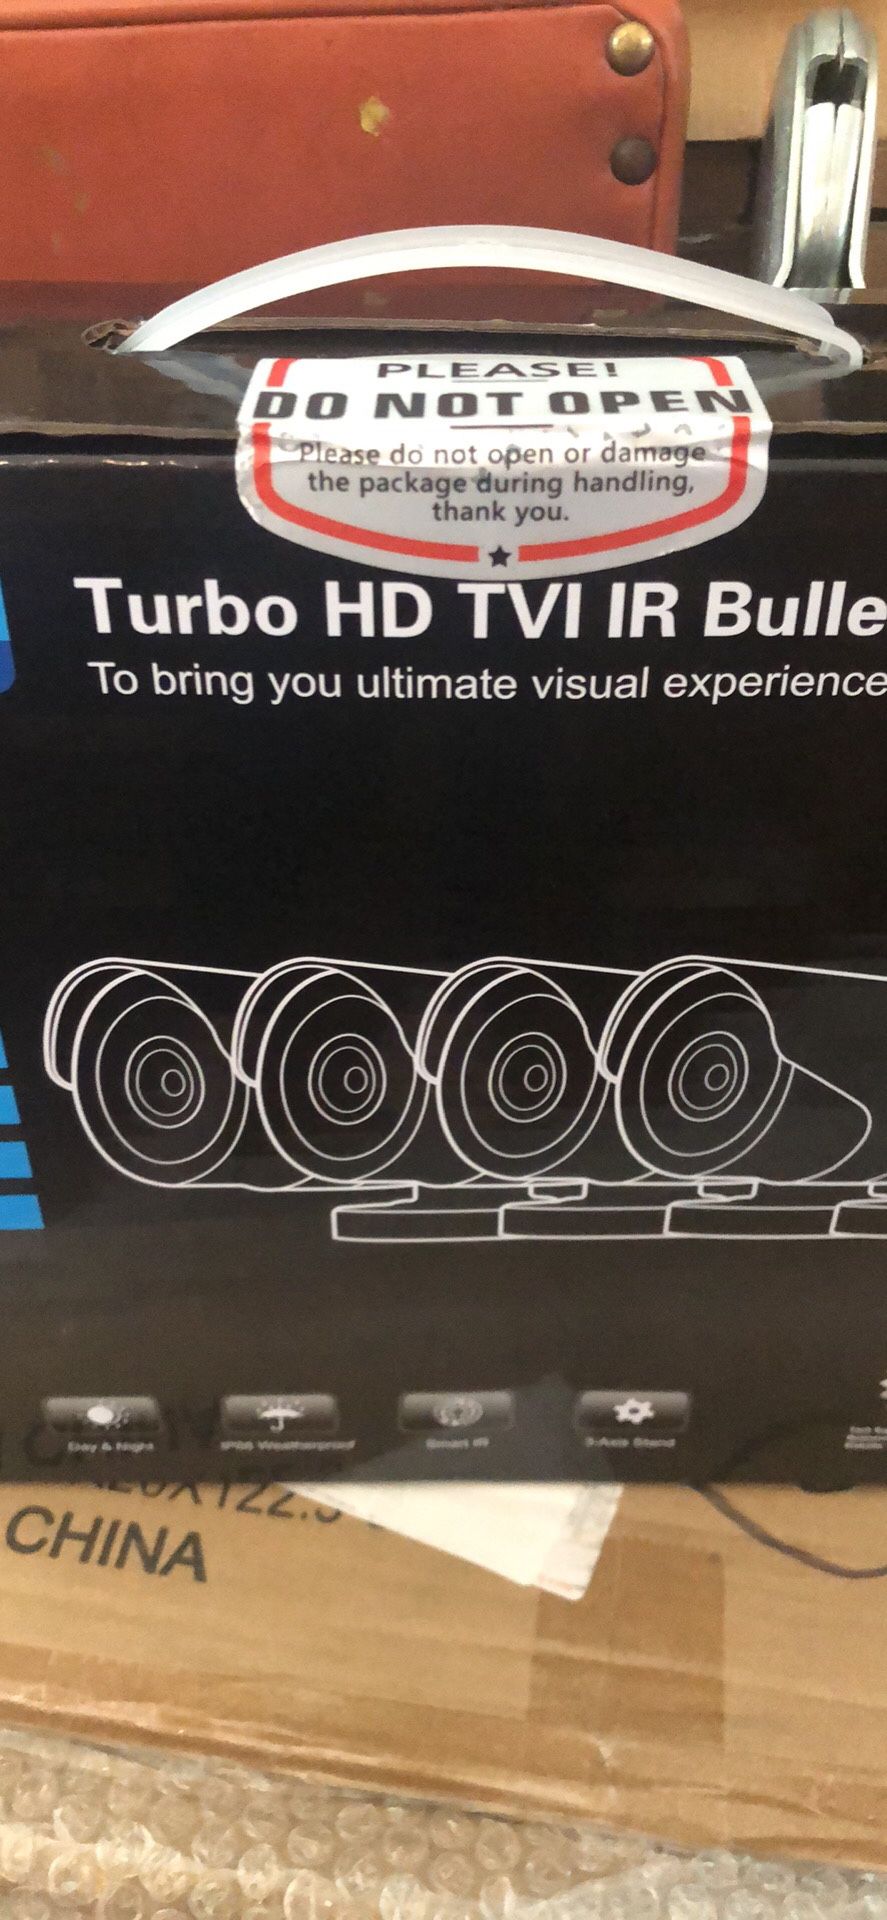 Turbo HD TVI IR Bullet Home Security Camera